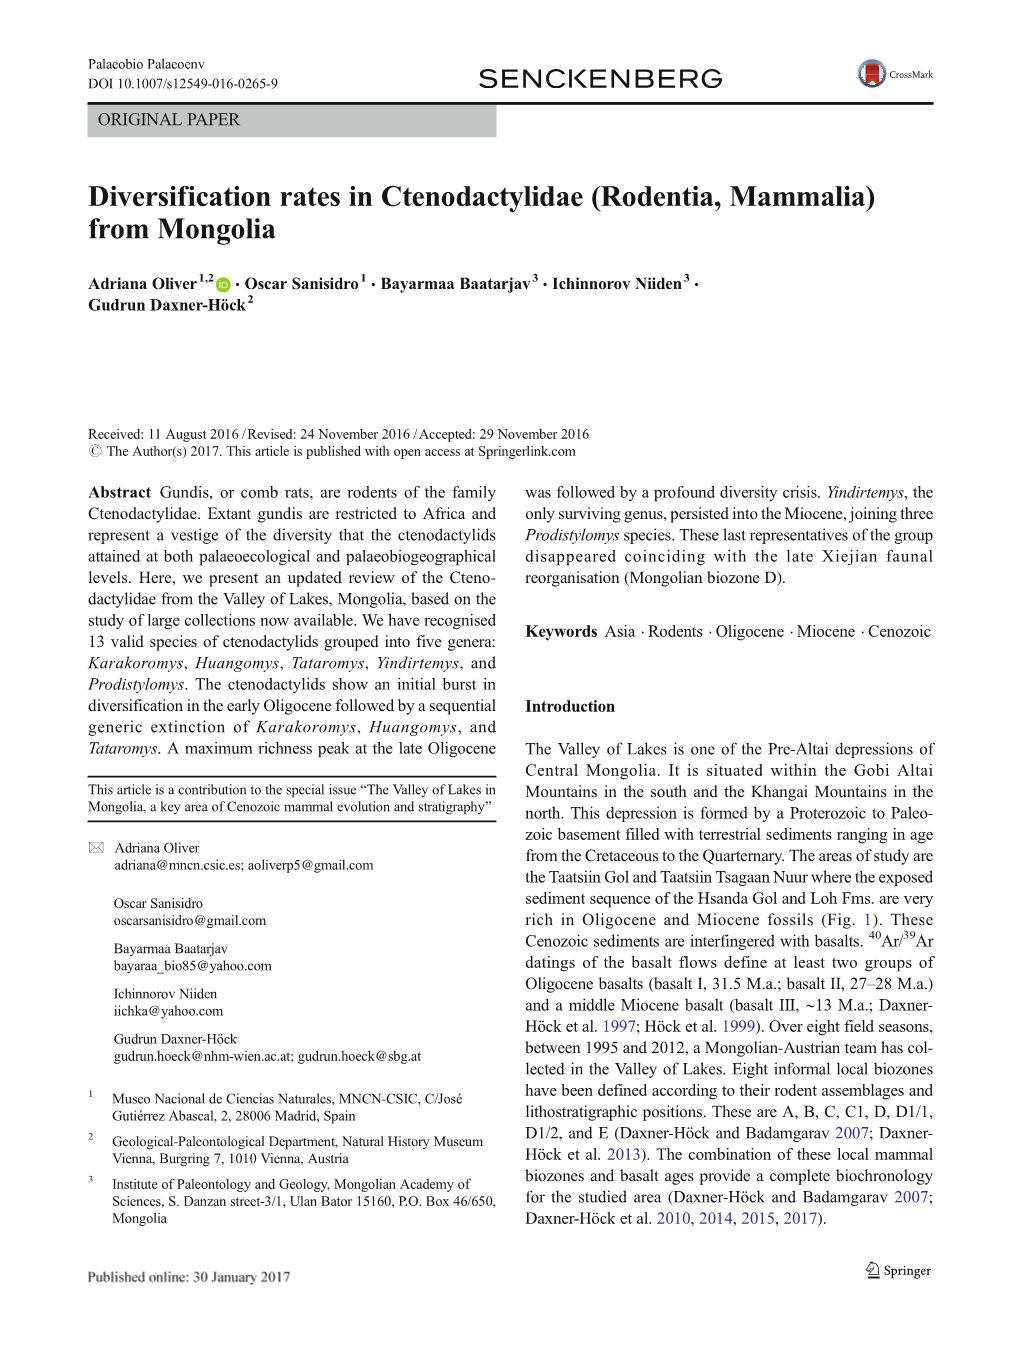 Diversification Rates in Ctenodactylidae (Rodentia, Mammalia) from Mongolia